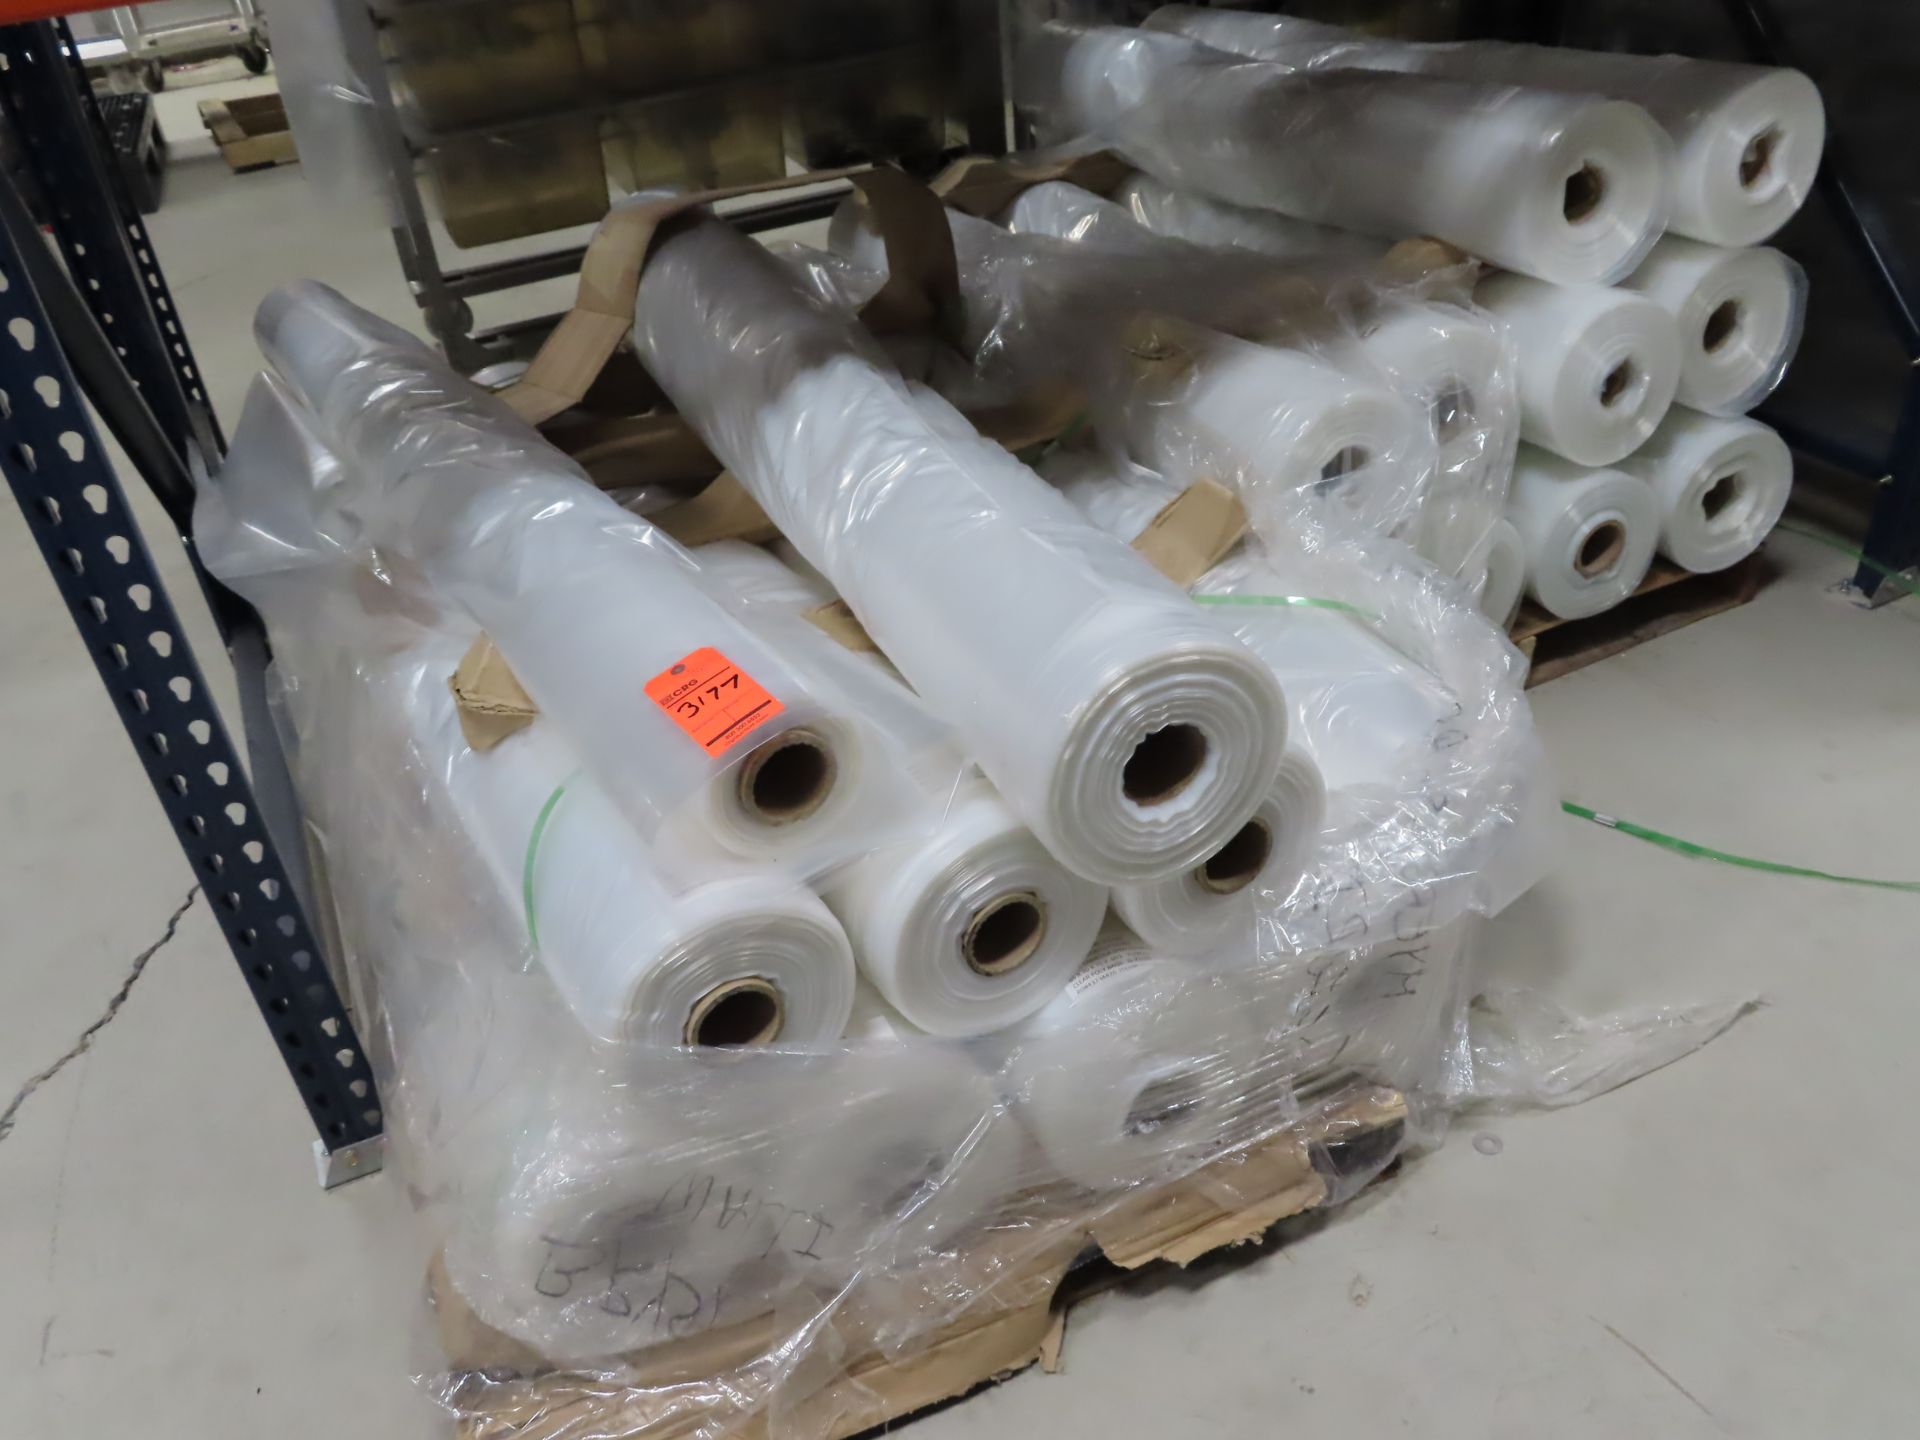 Lot of assorted rolls of plastic bags, 65x30x75x1003. (75) bags per full rolls, 19t rolls.